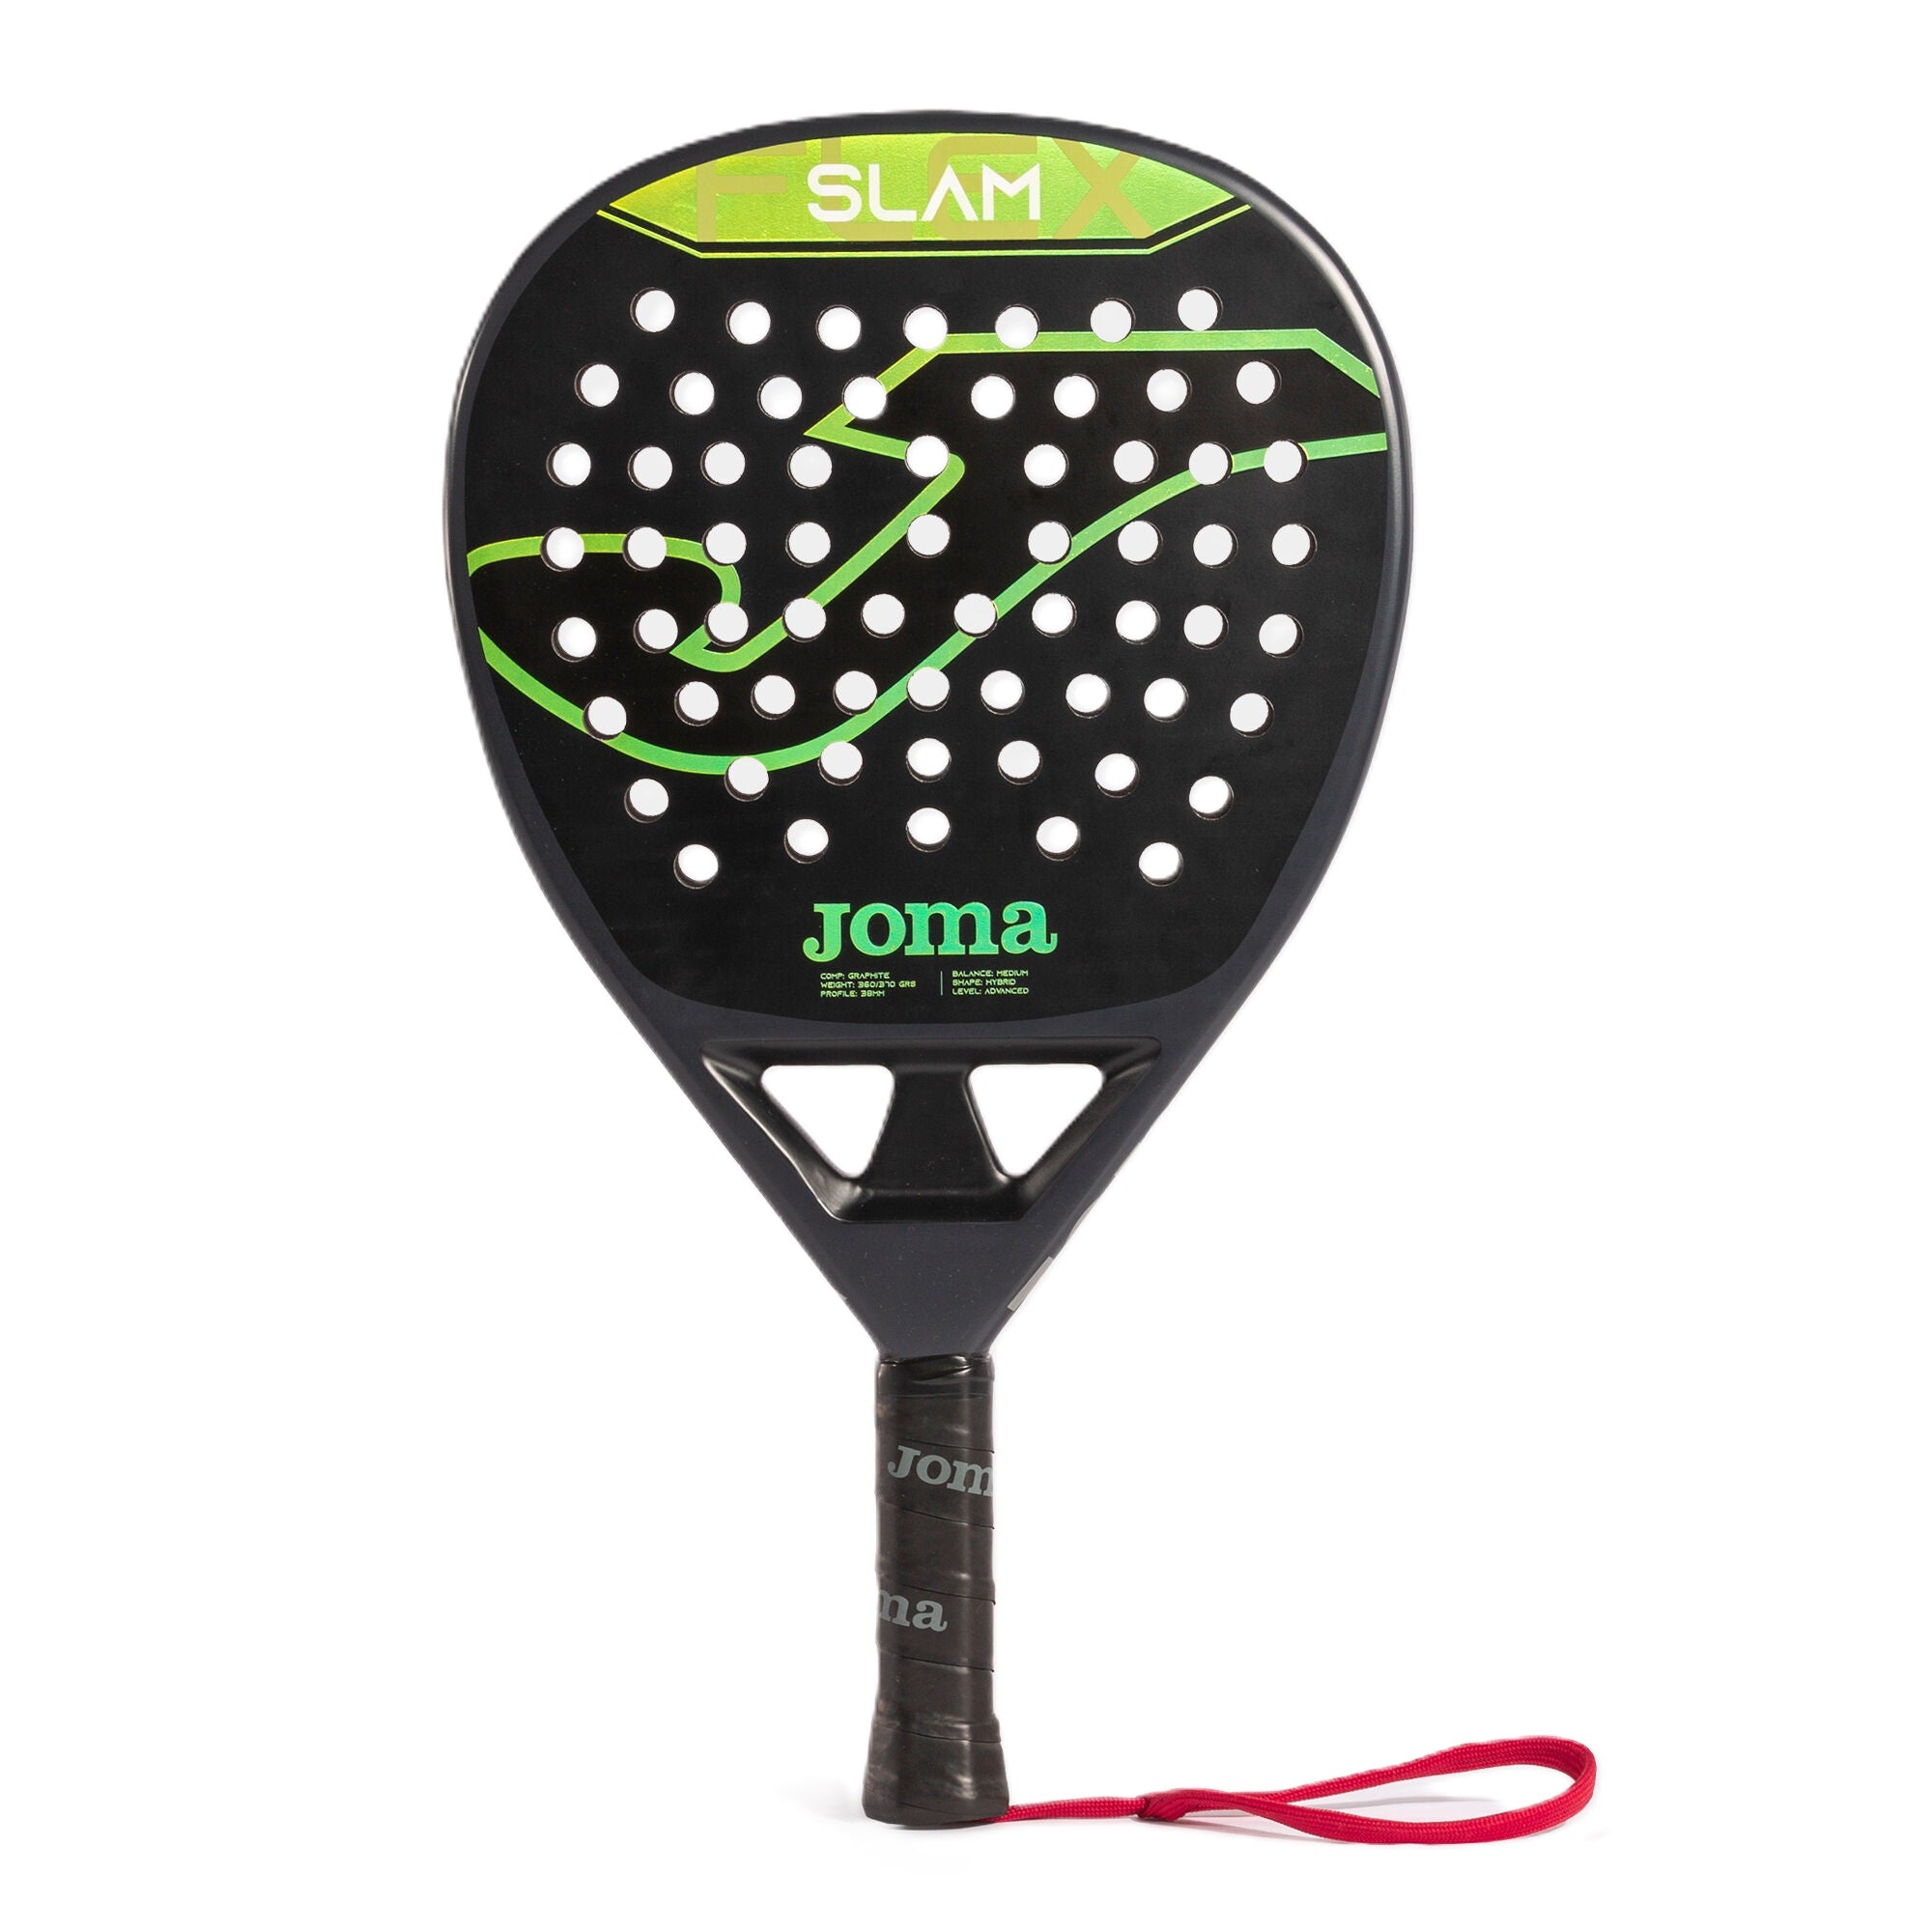 Joma Slam Flex anthracite green  padel racket